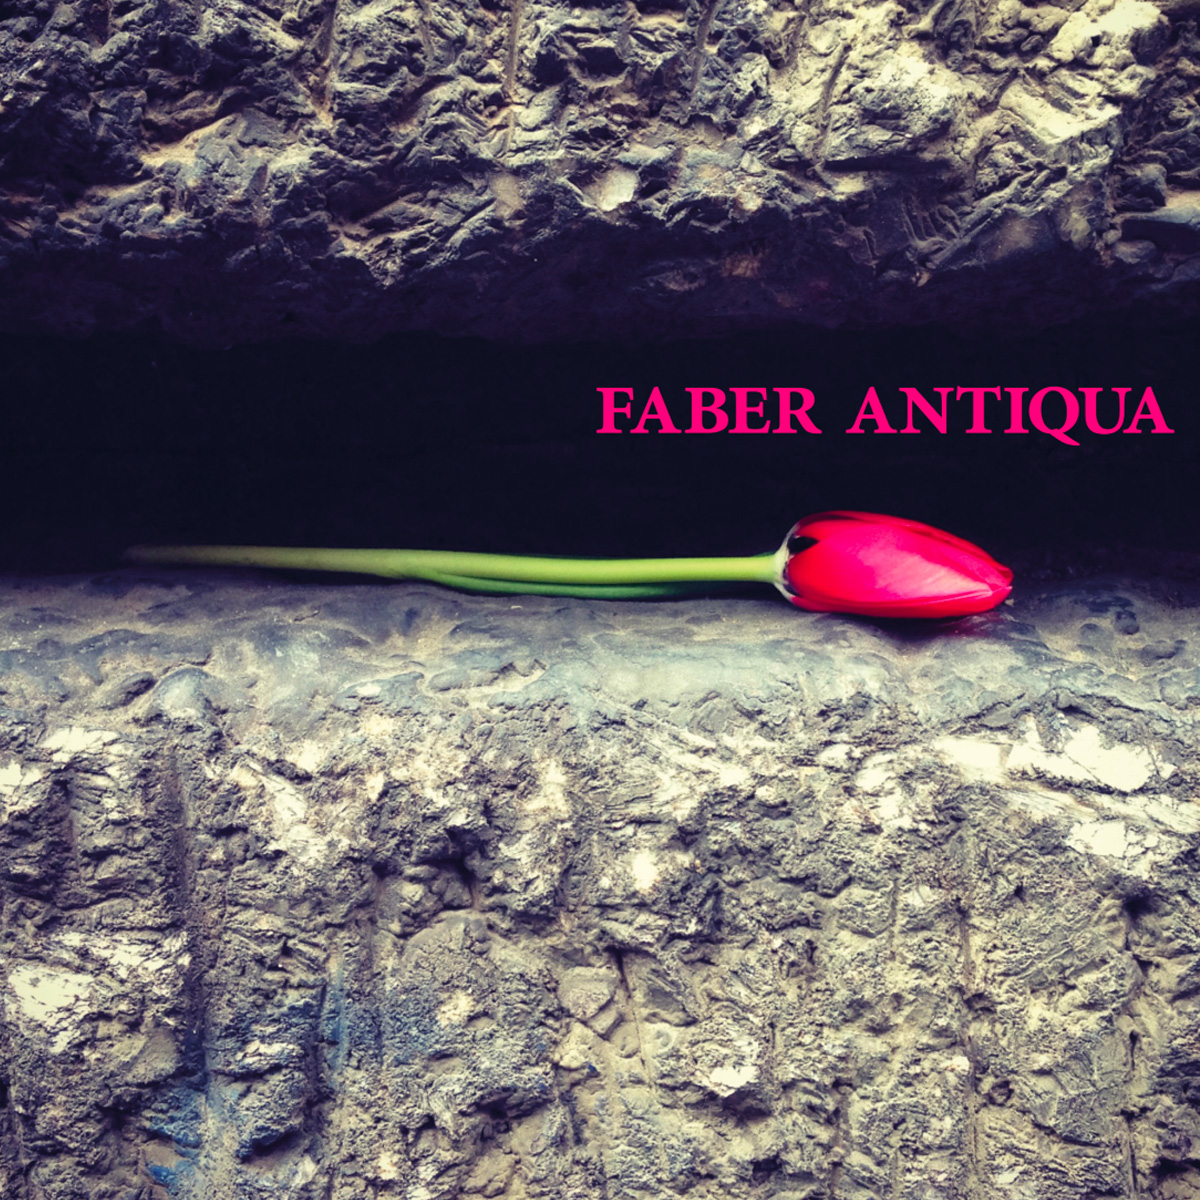 Discografia - Faber Antiqua